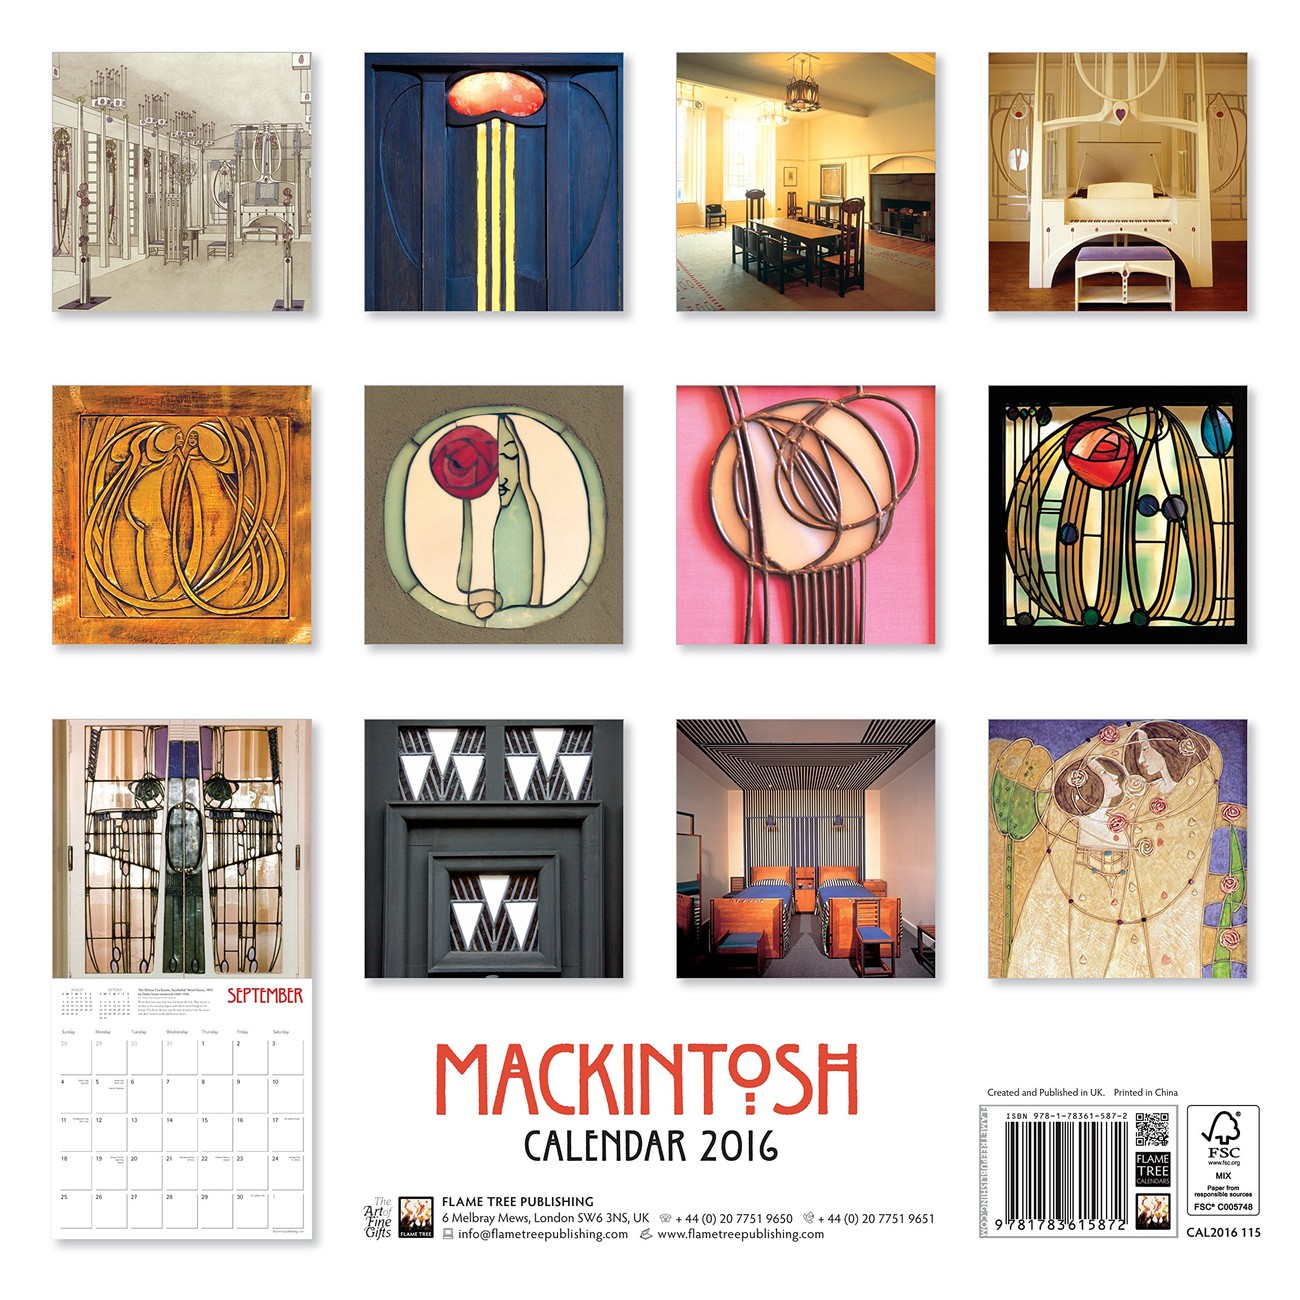 Charles Rennie Mackintosh Calendar - Karla Marline